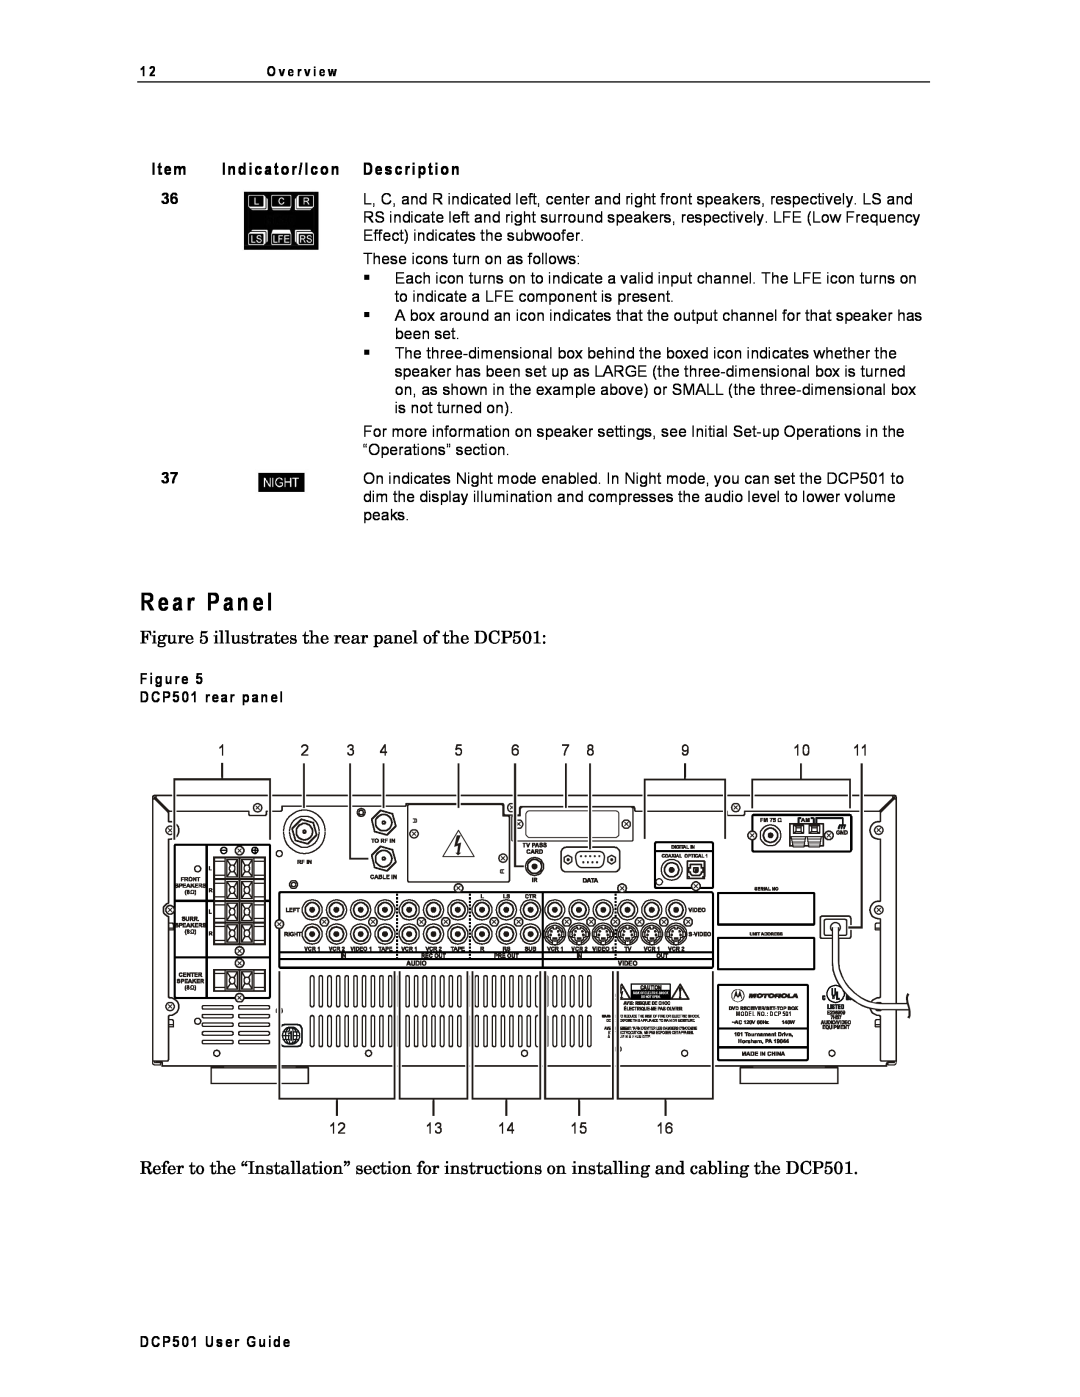 Motorola manual R e a r P an el, Indicator/Icon Description, illustrates the rear panel of the DCP501 